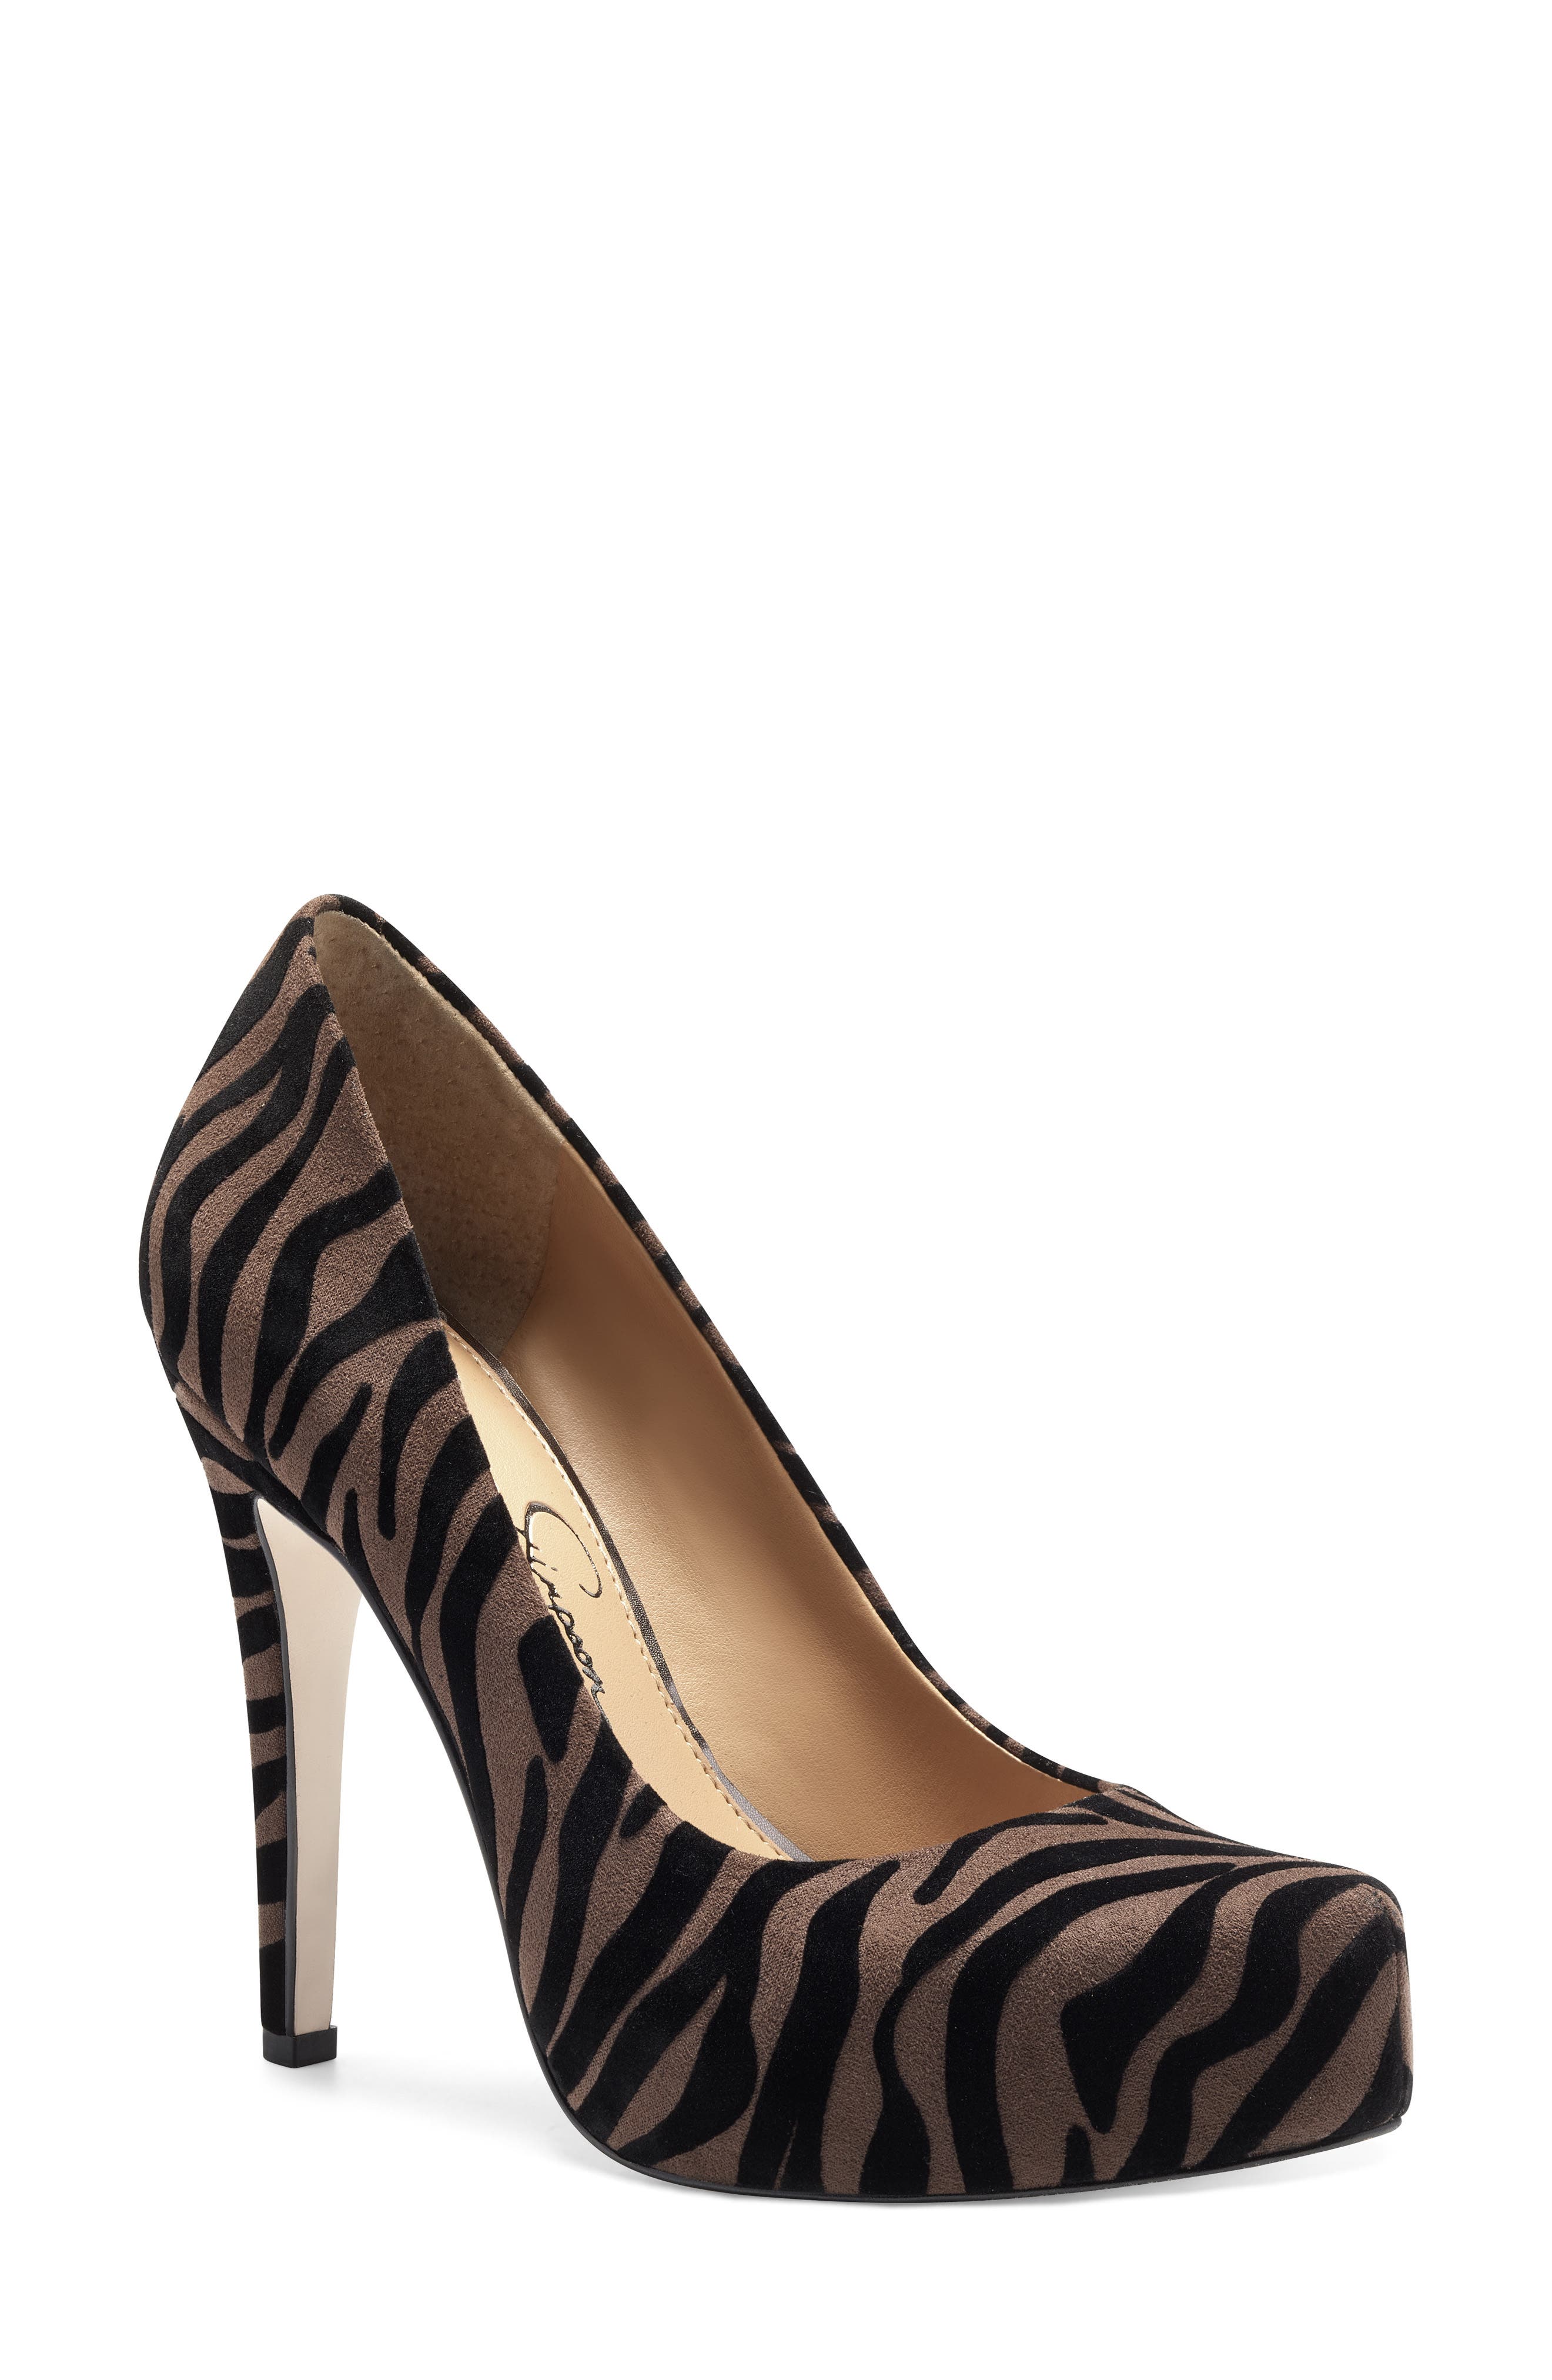 jessica simpson black lace heels